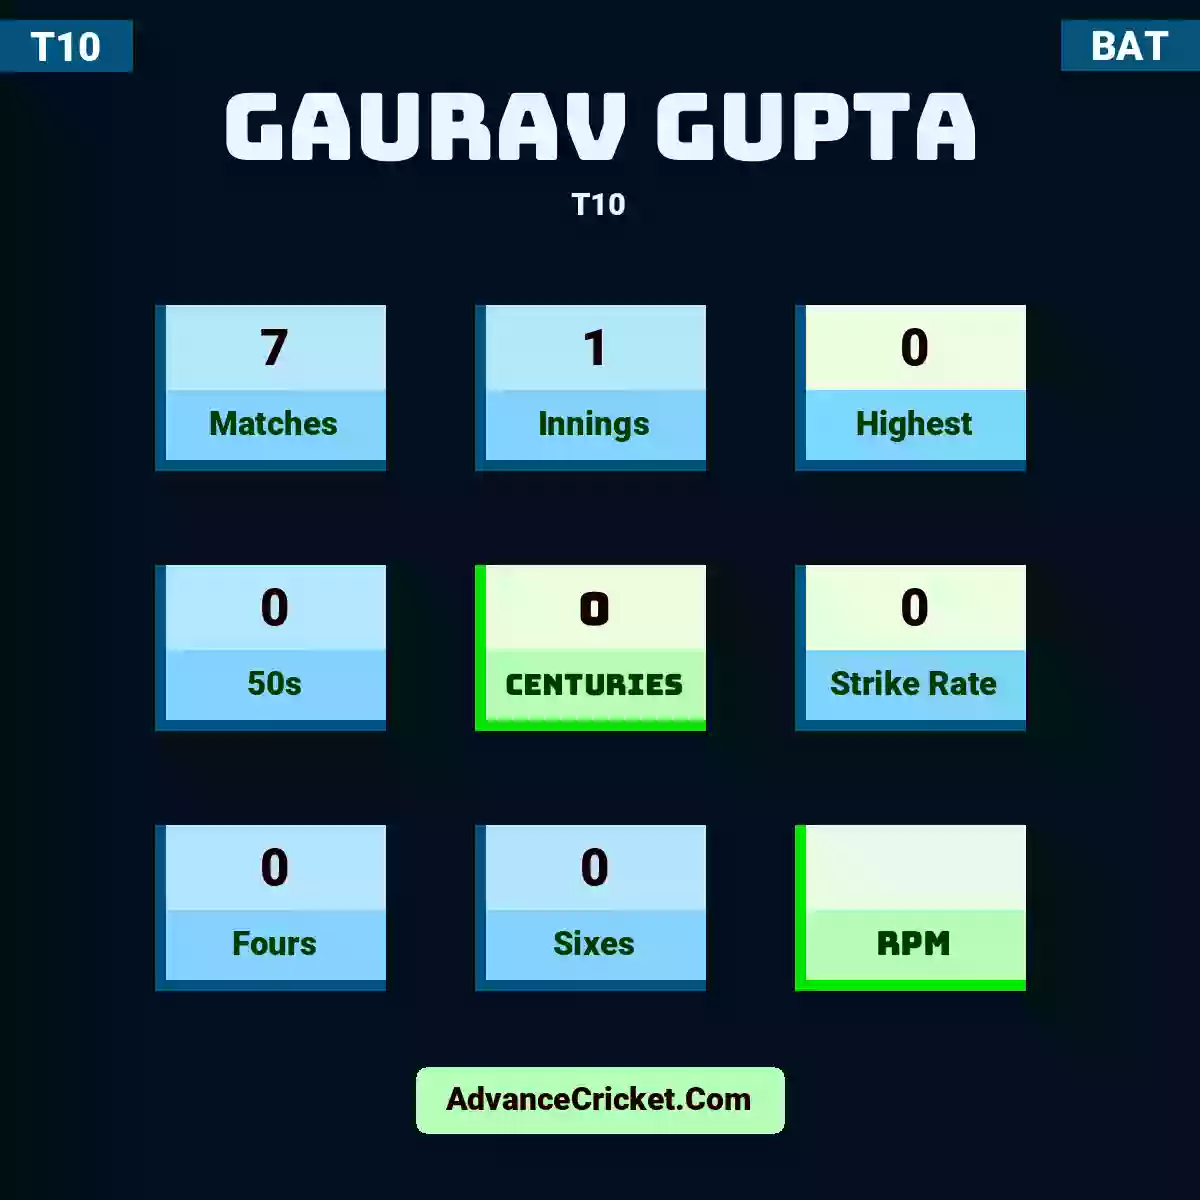 Gaurav Gupta T10 , Gaurav Gupta played 7 matches, scored 0 runs as highest, 0 half-centuries, and 0 centuries, with a strike rate of 0. G.Gupta hit 0 fours and 0 sixes.